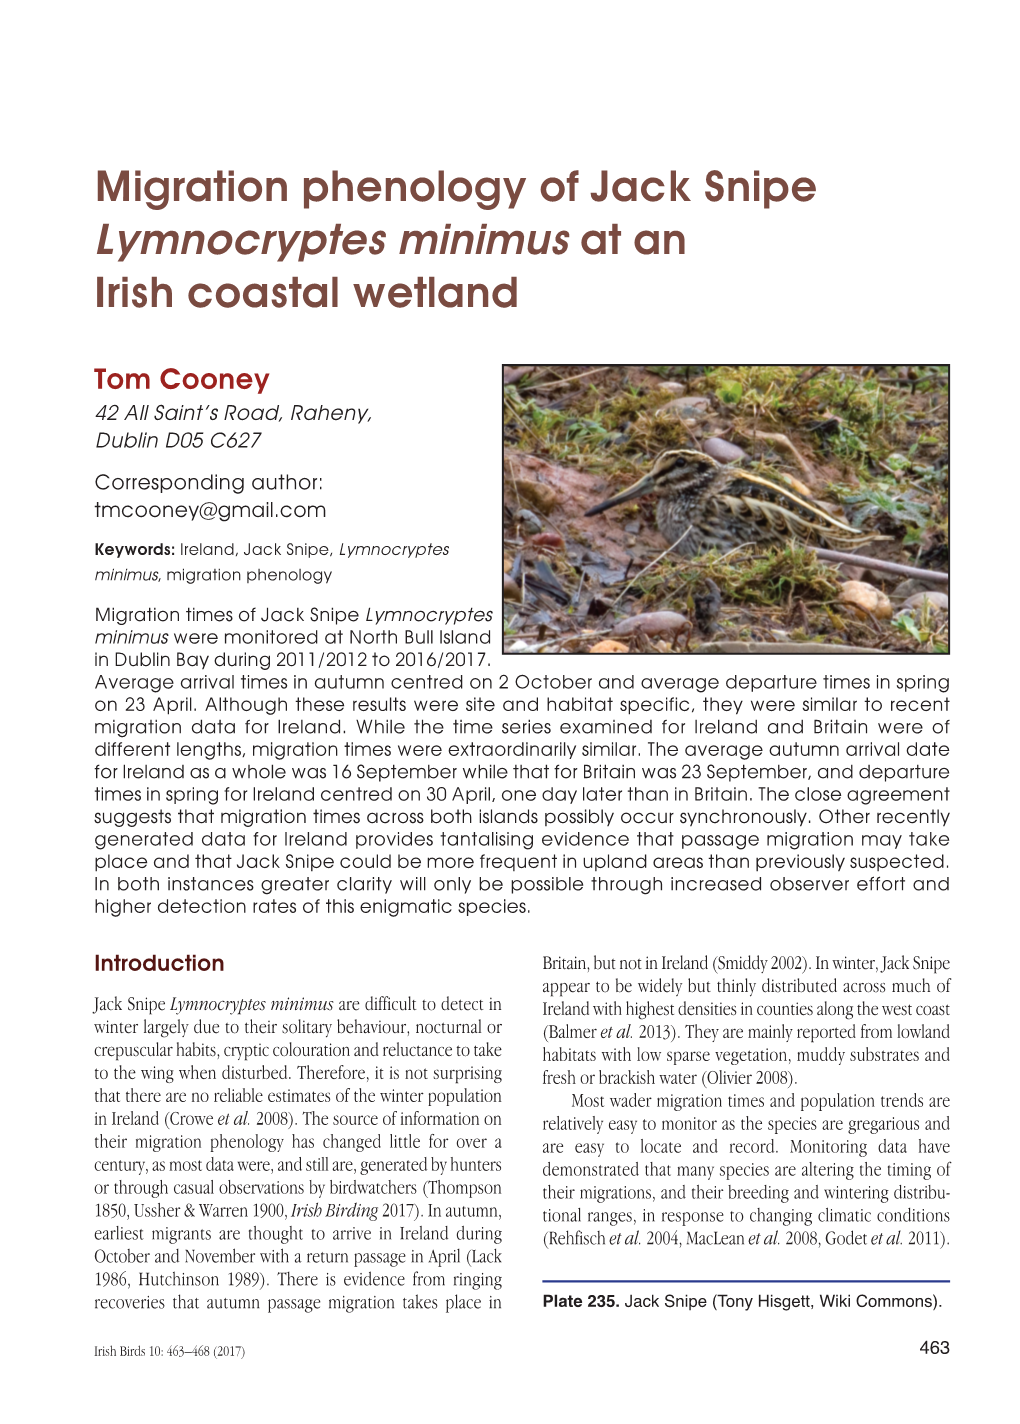 Migration Phenology of Jack Snipe Lymnocryptes Minimus at an Irish Coastal Wetland